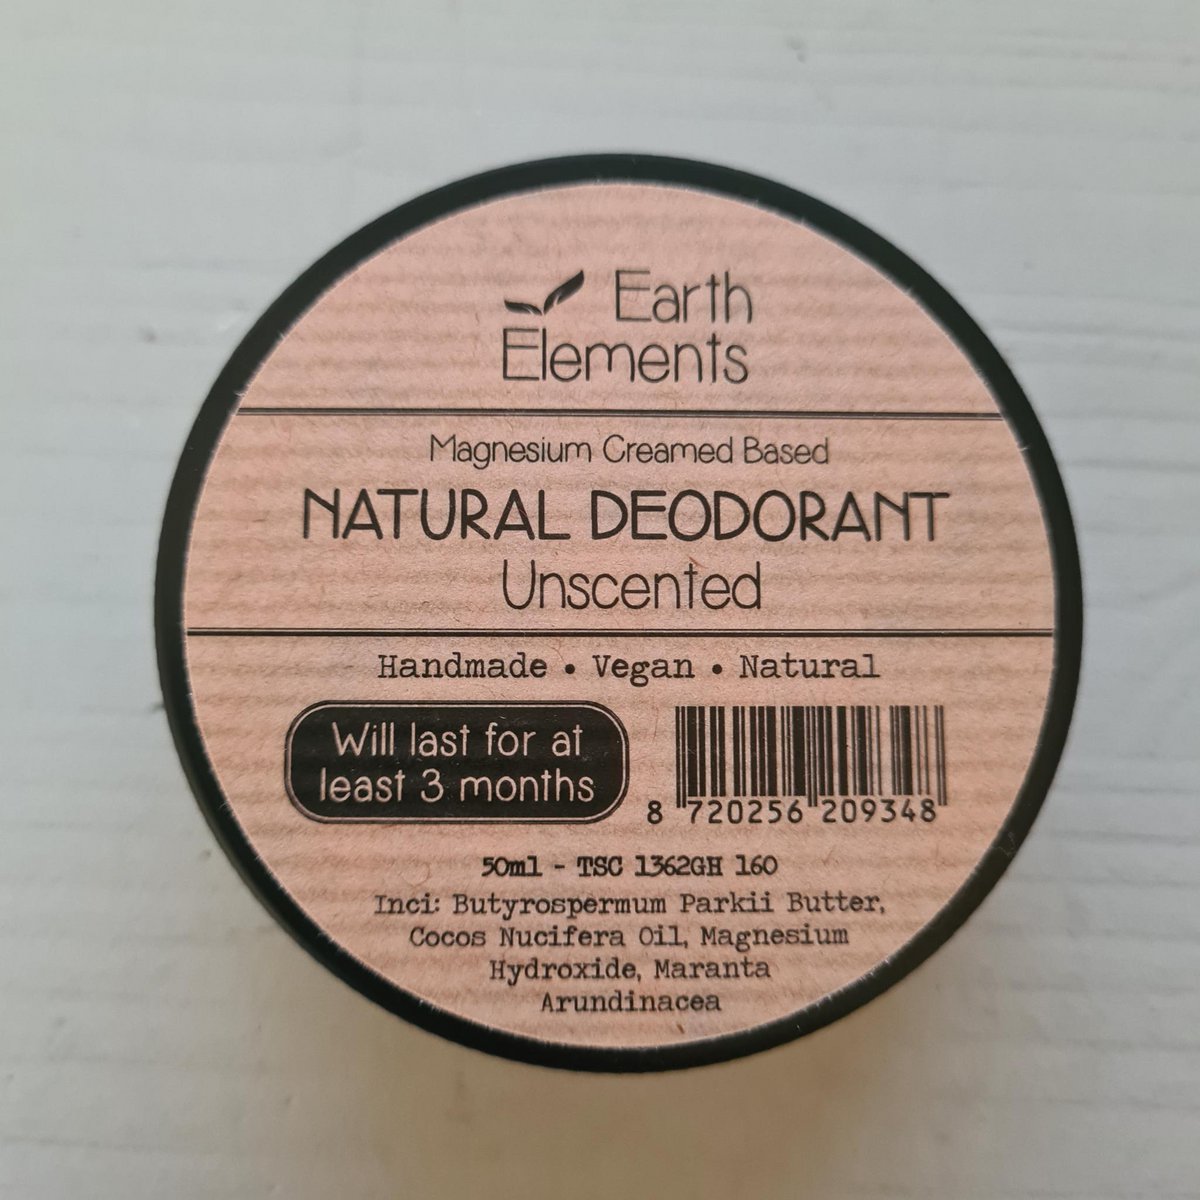 Natuurlijke deodorant naturel, zonder bakingsoda